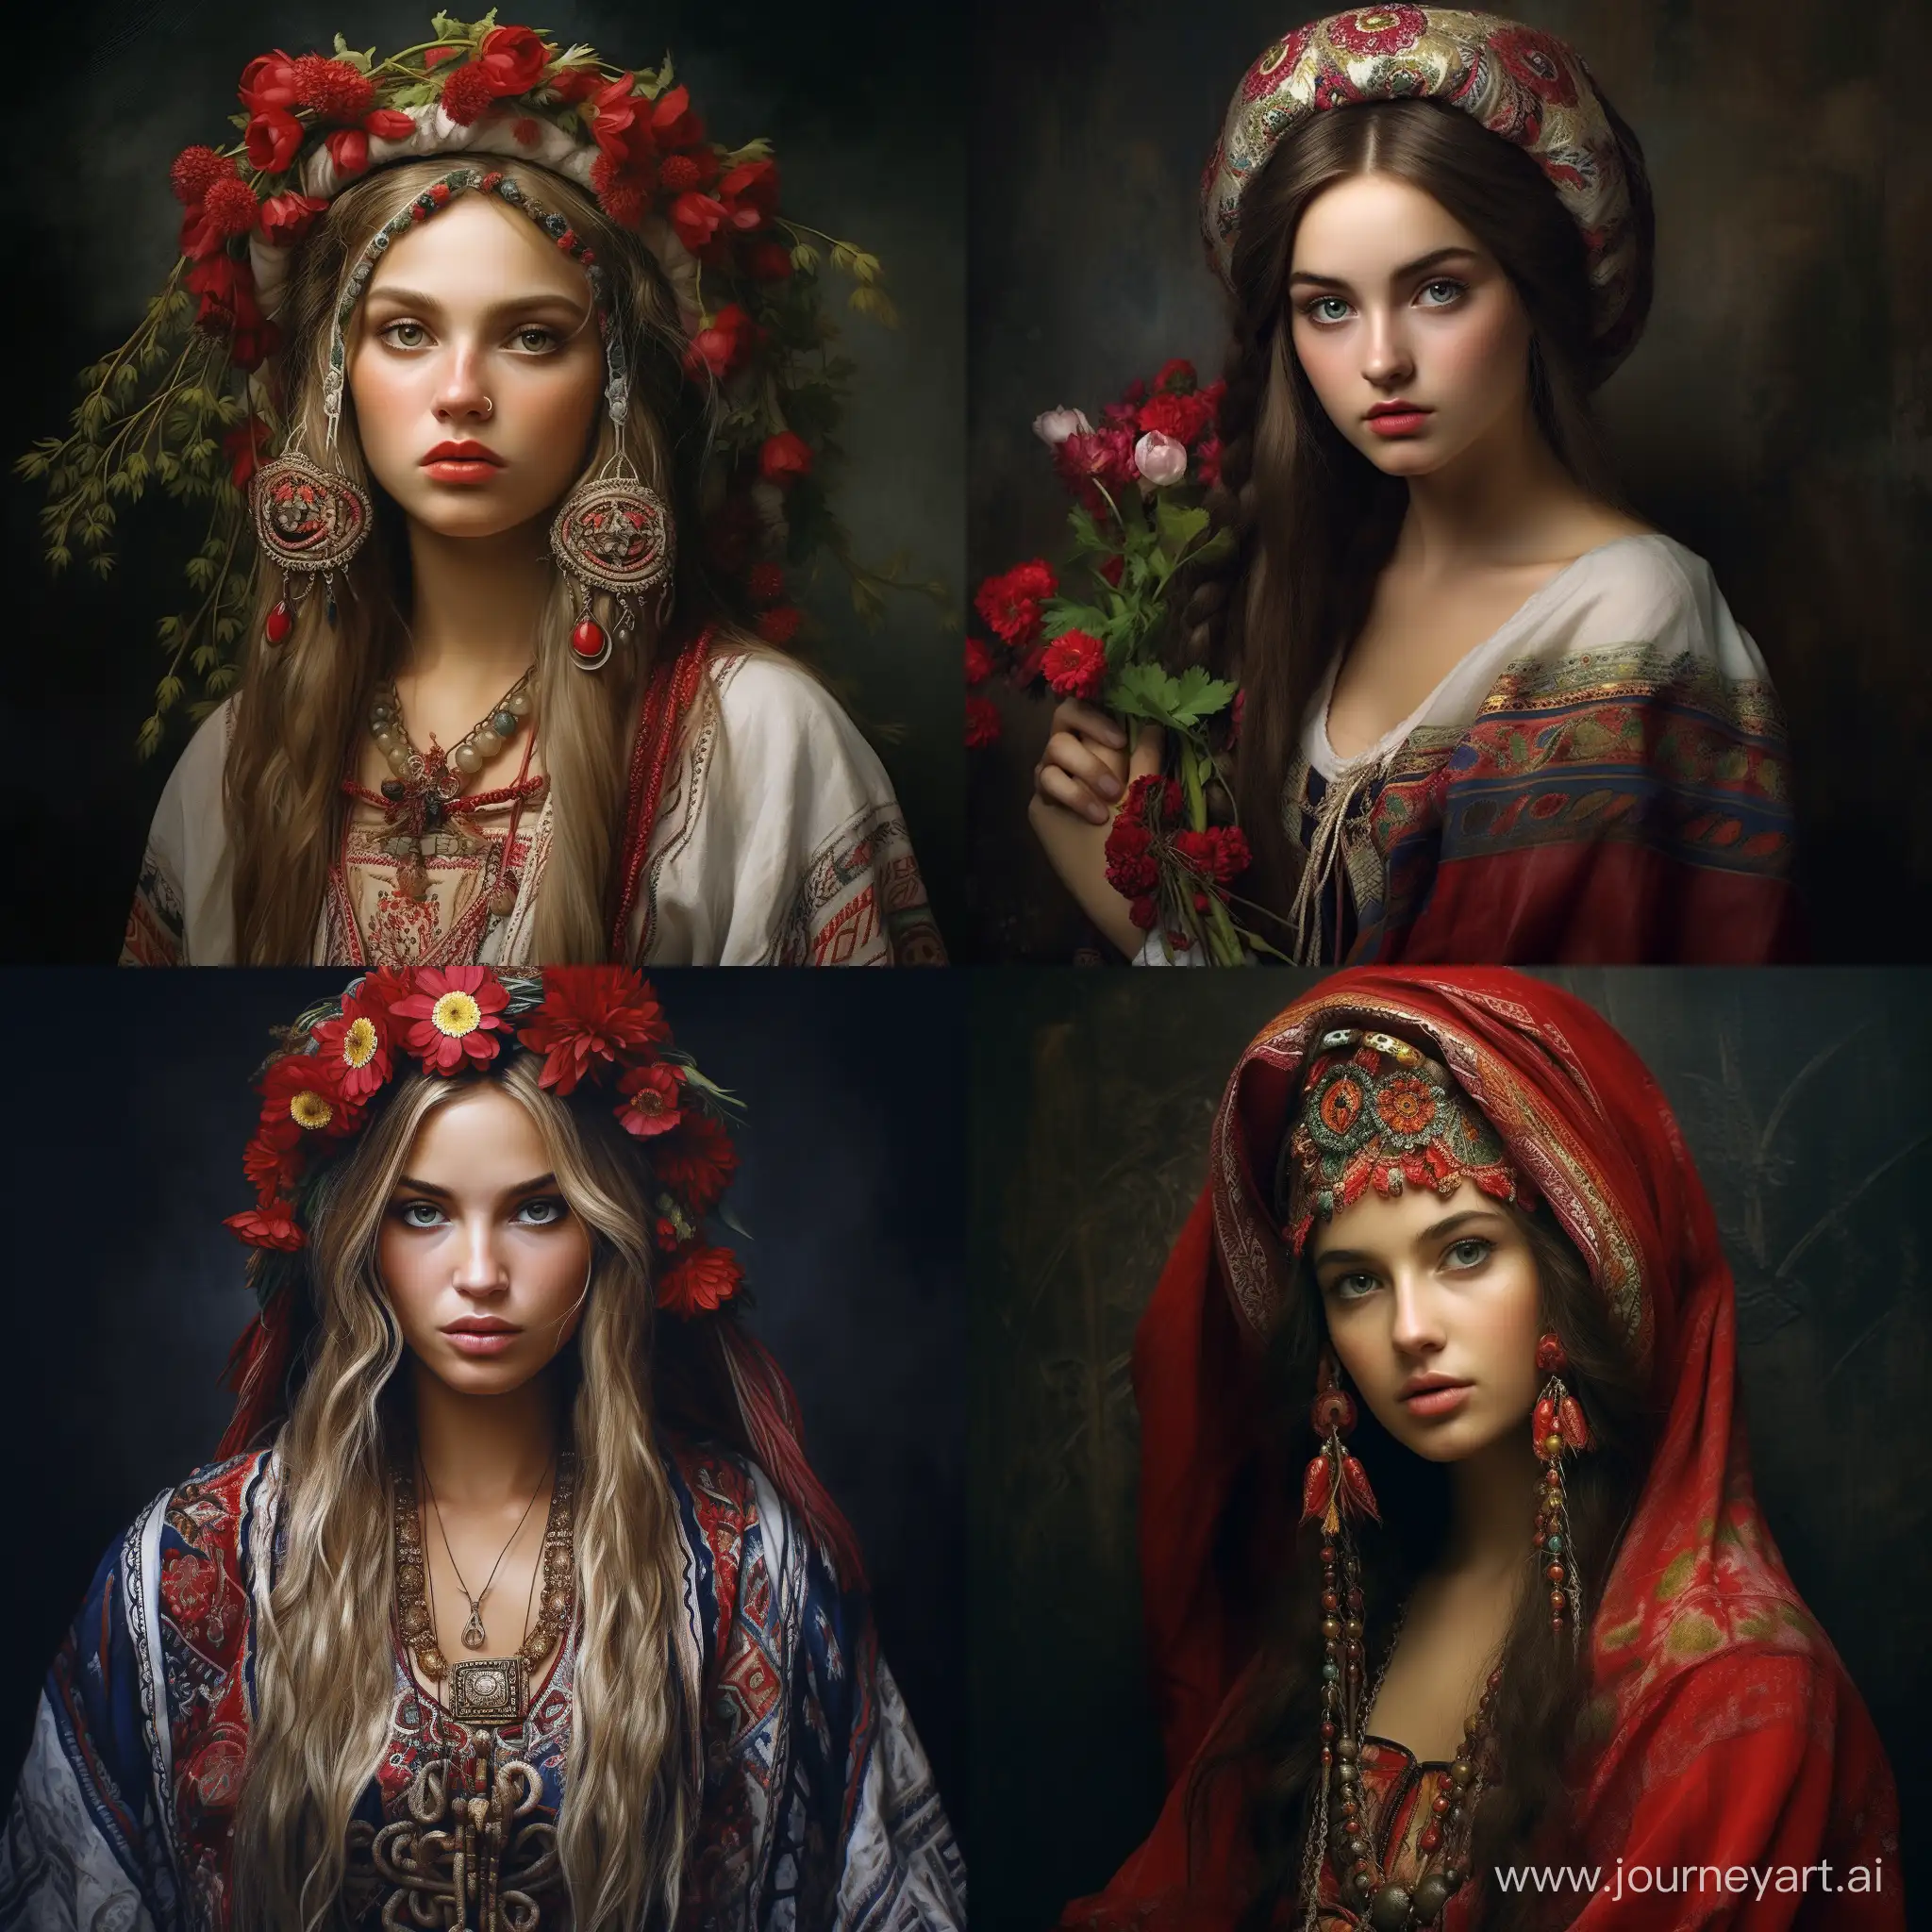 Traditional-Ukrainian-Woman-in-11-Aspect-Ratio-Image-98975